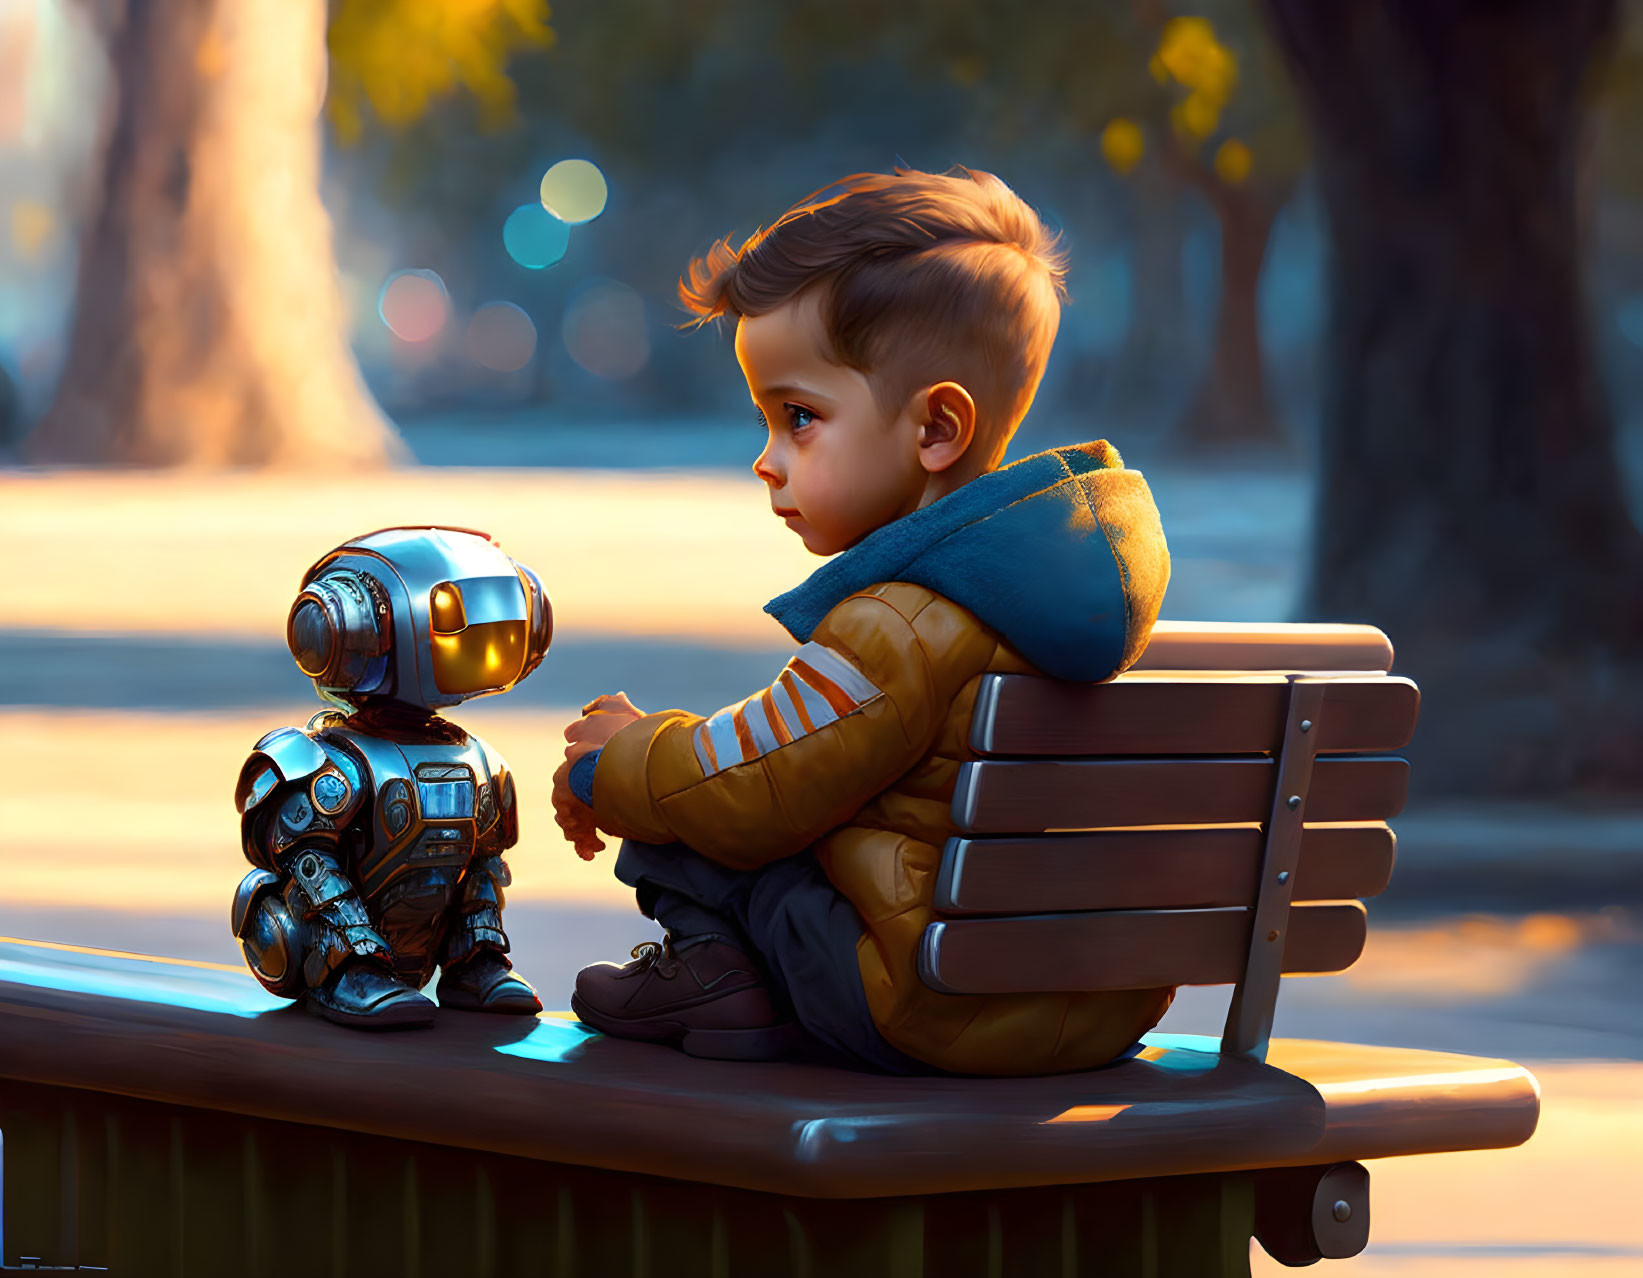 Cute Child with Robo Friend 